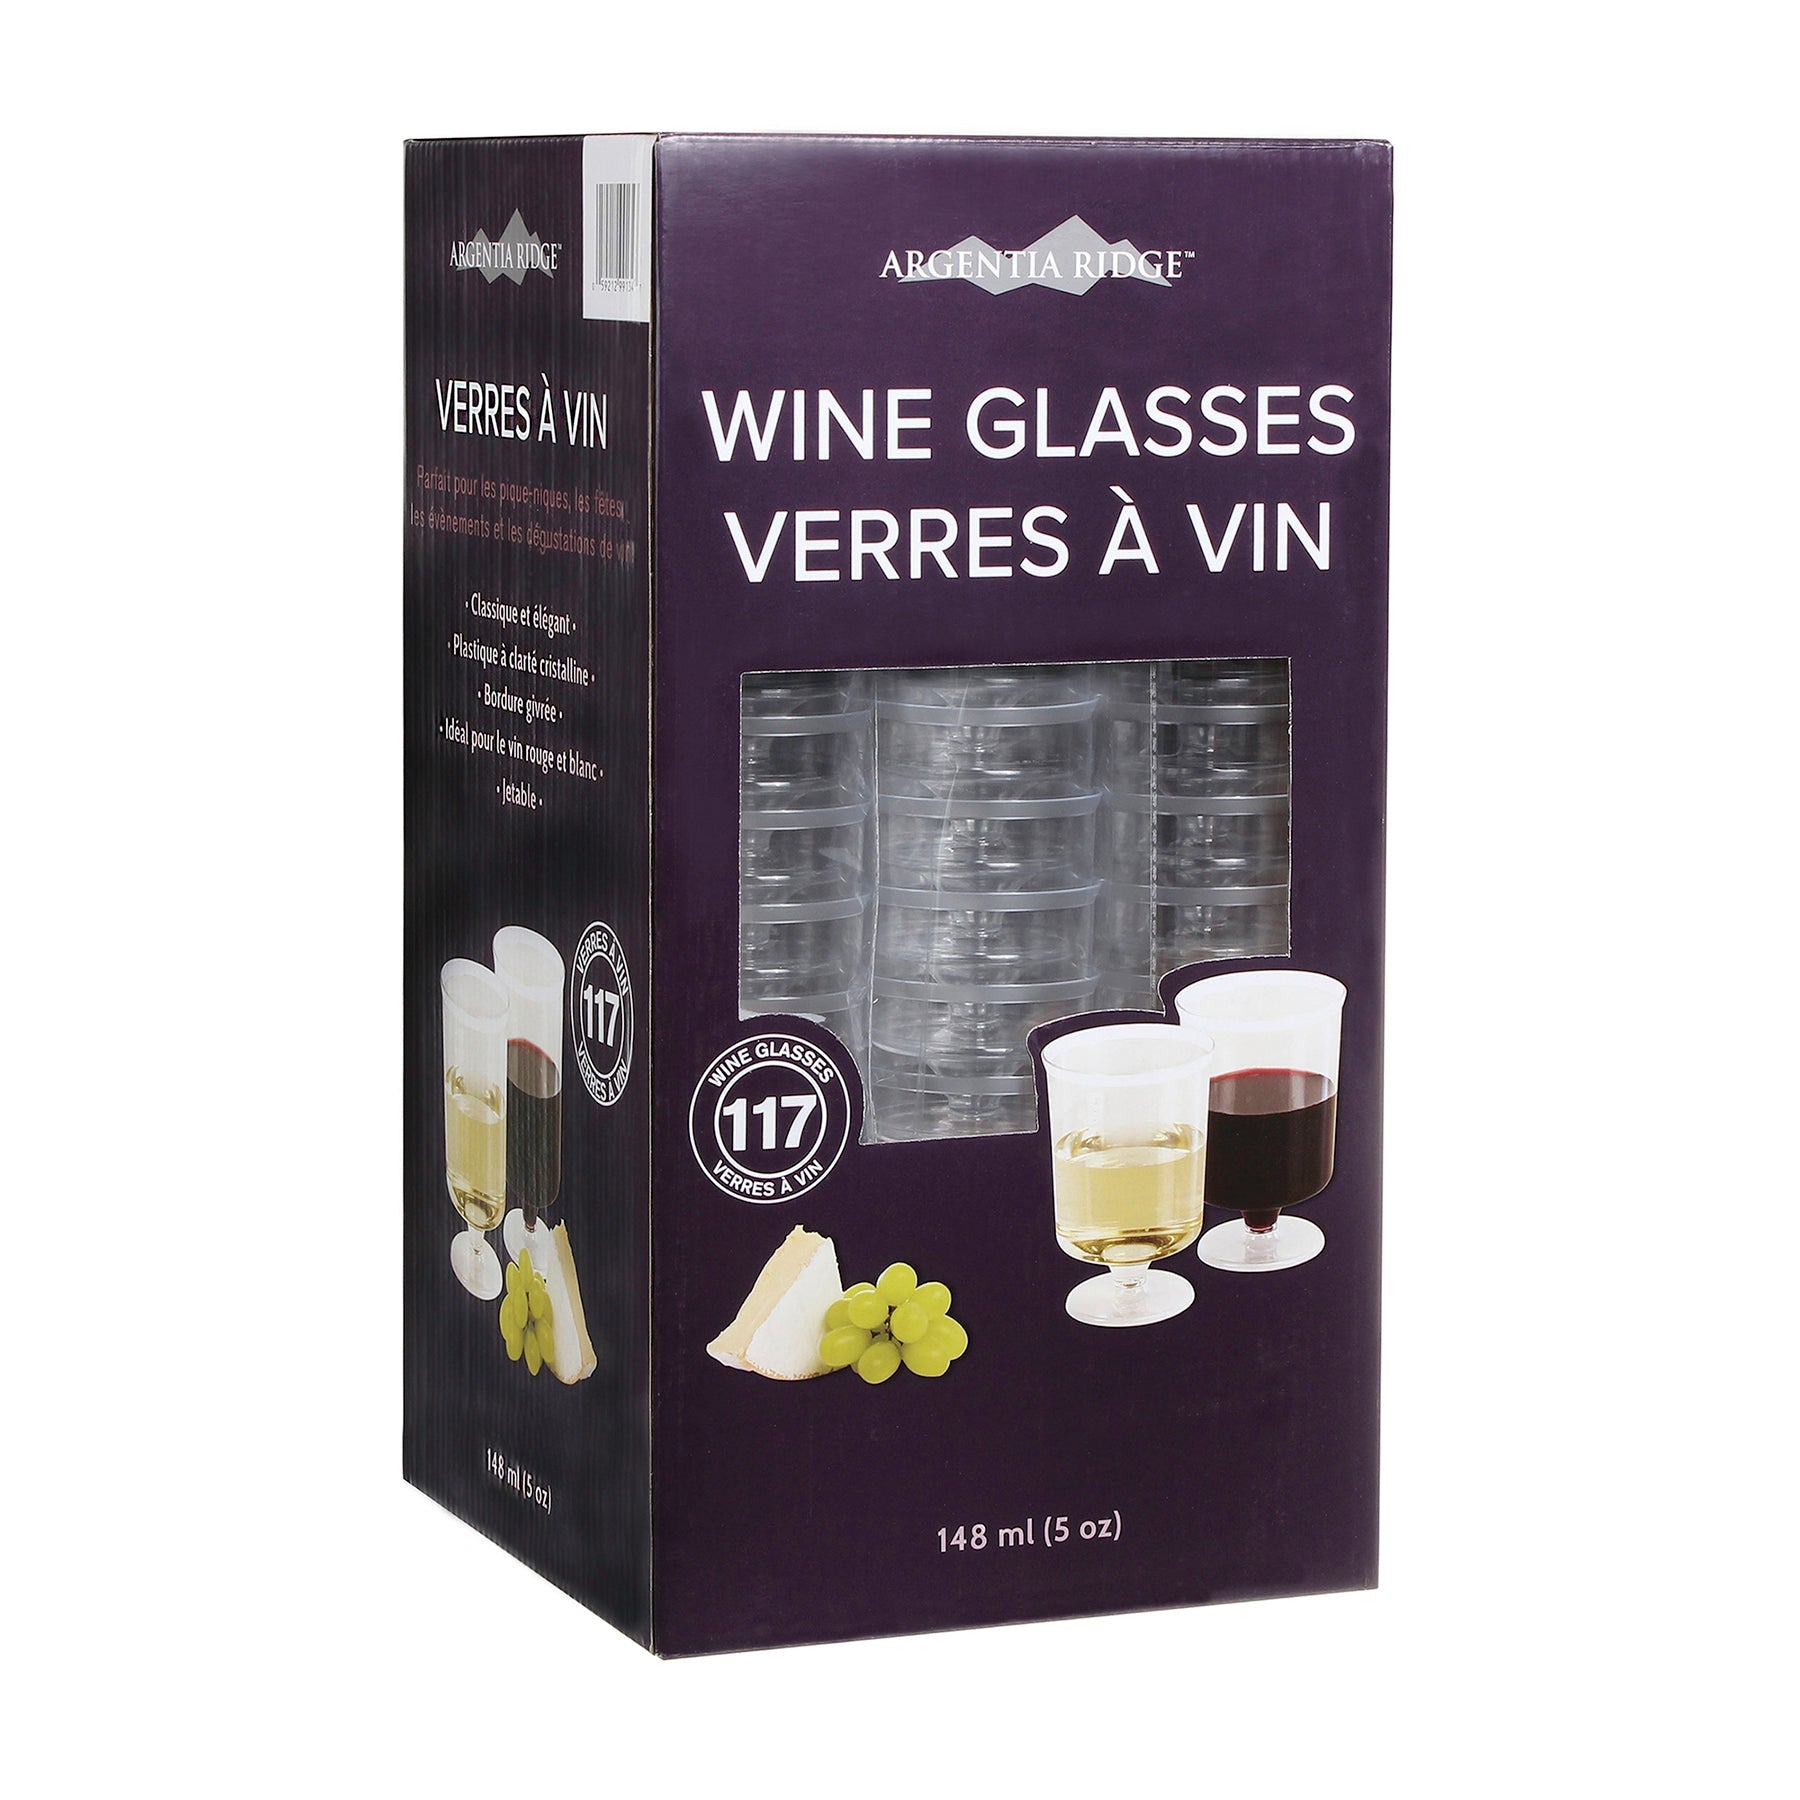 Argentia Ridge 117 Wine Glasses Clear Plastic 5oz each